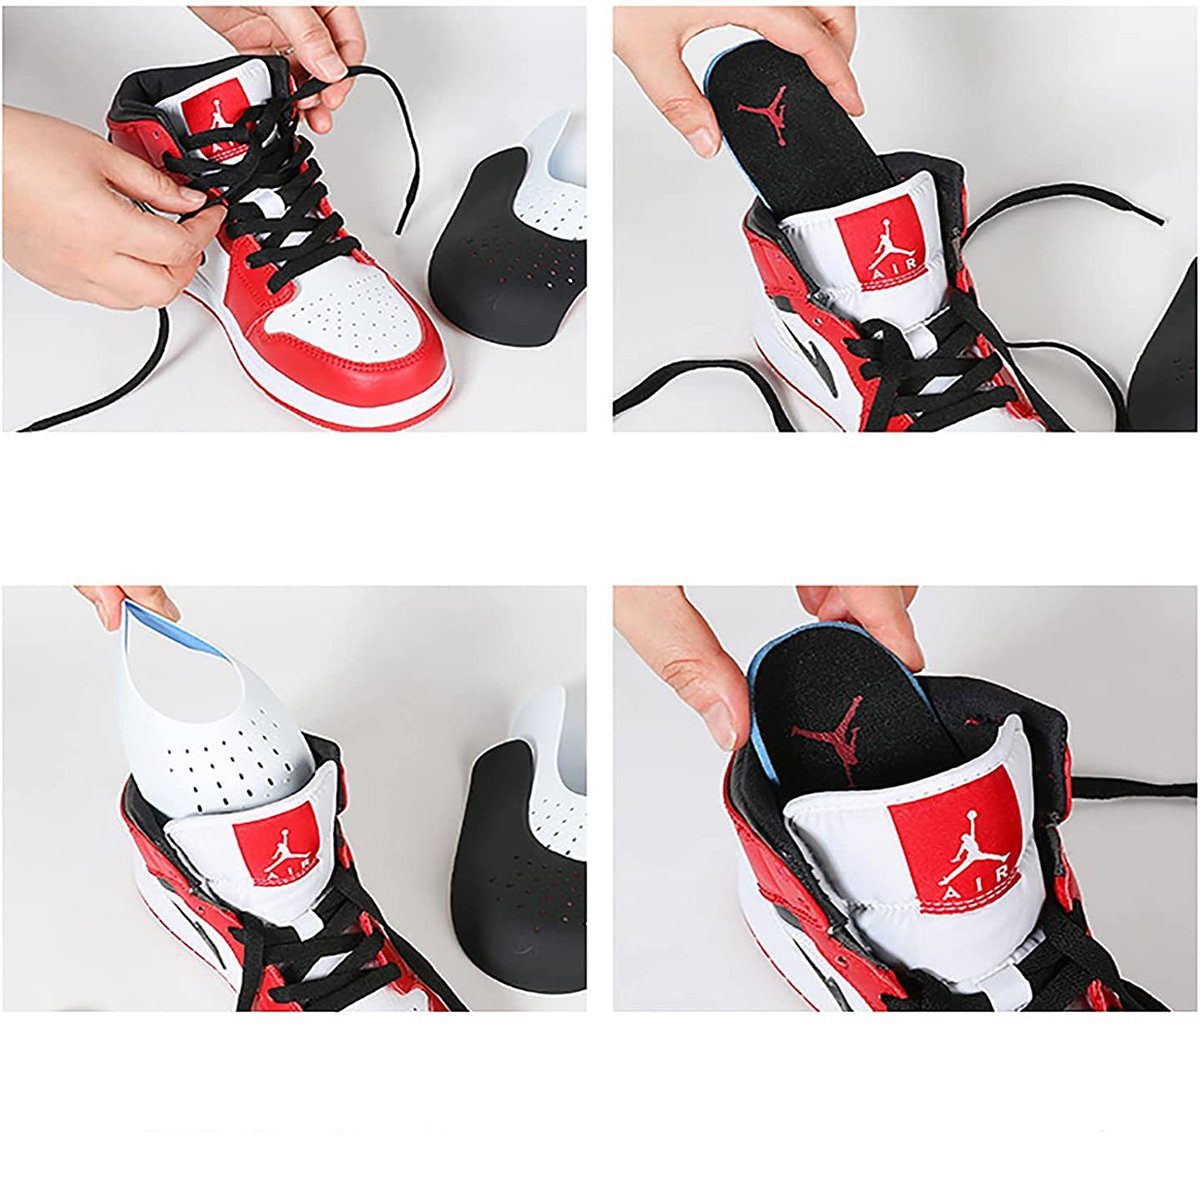 Schuhe Zehenbox,Verhindern Jormftte Schuhdehner Weiß Knitterschutz Knitterschutz Sneaker Sie